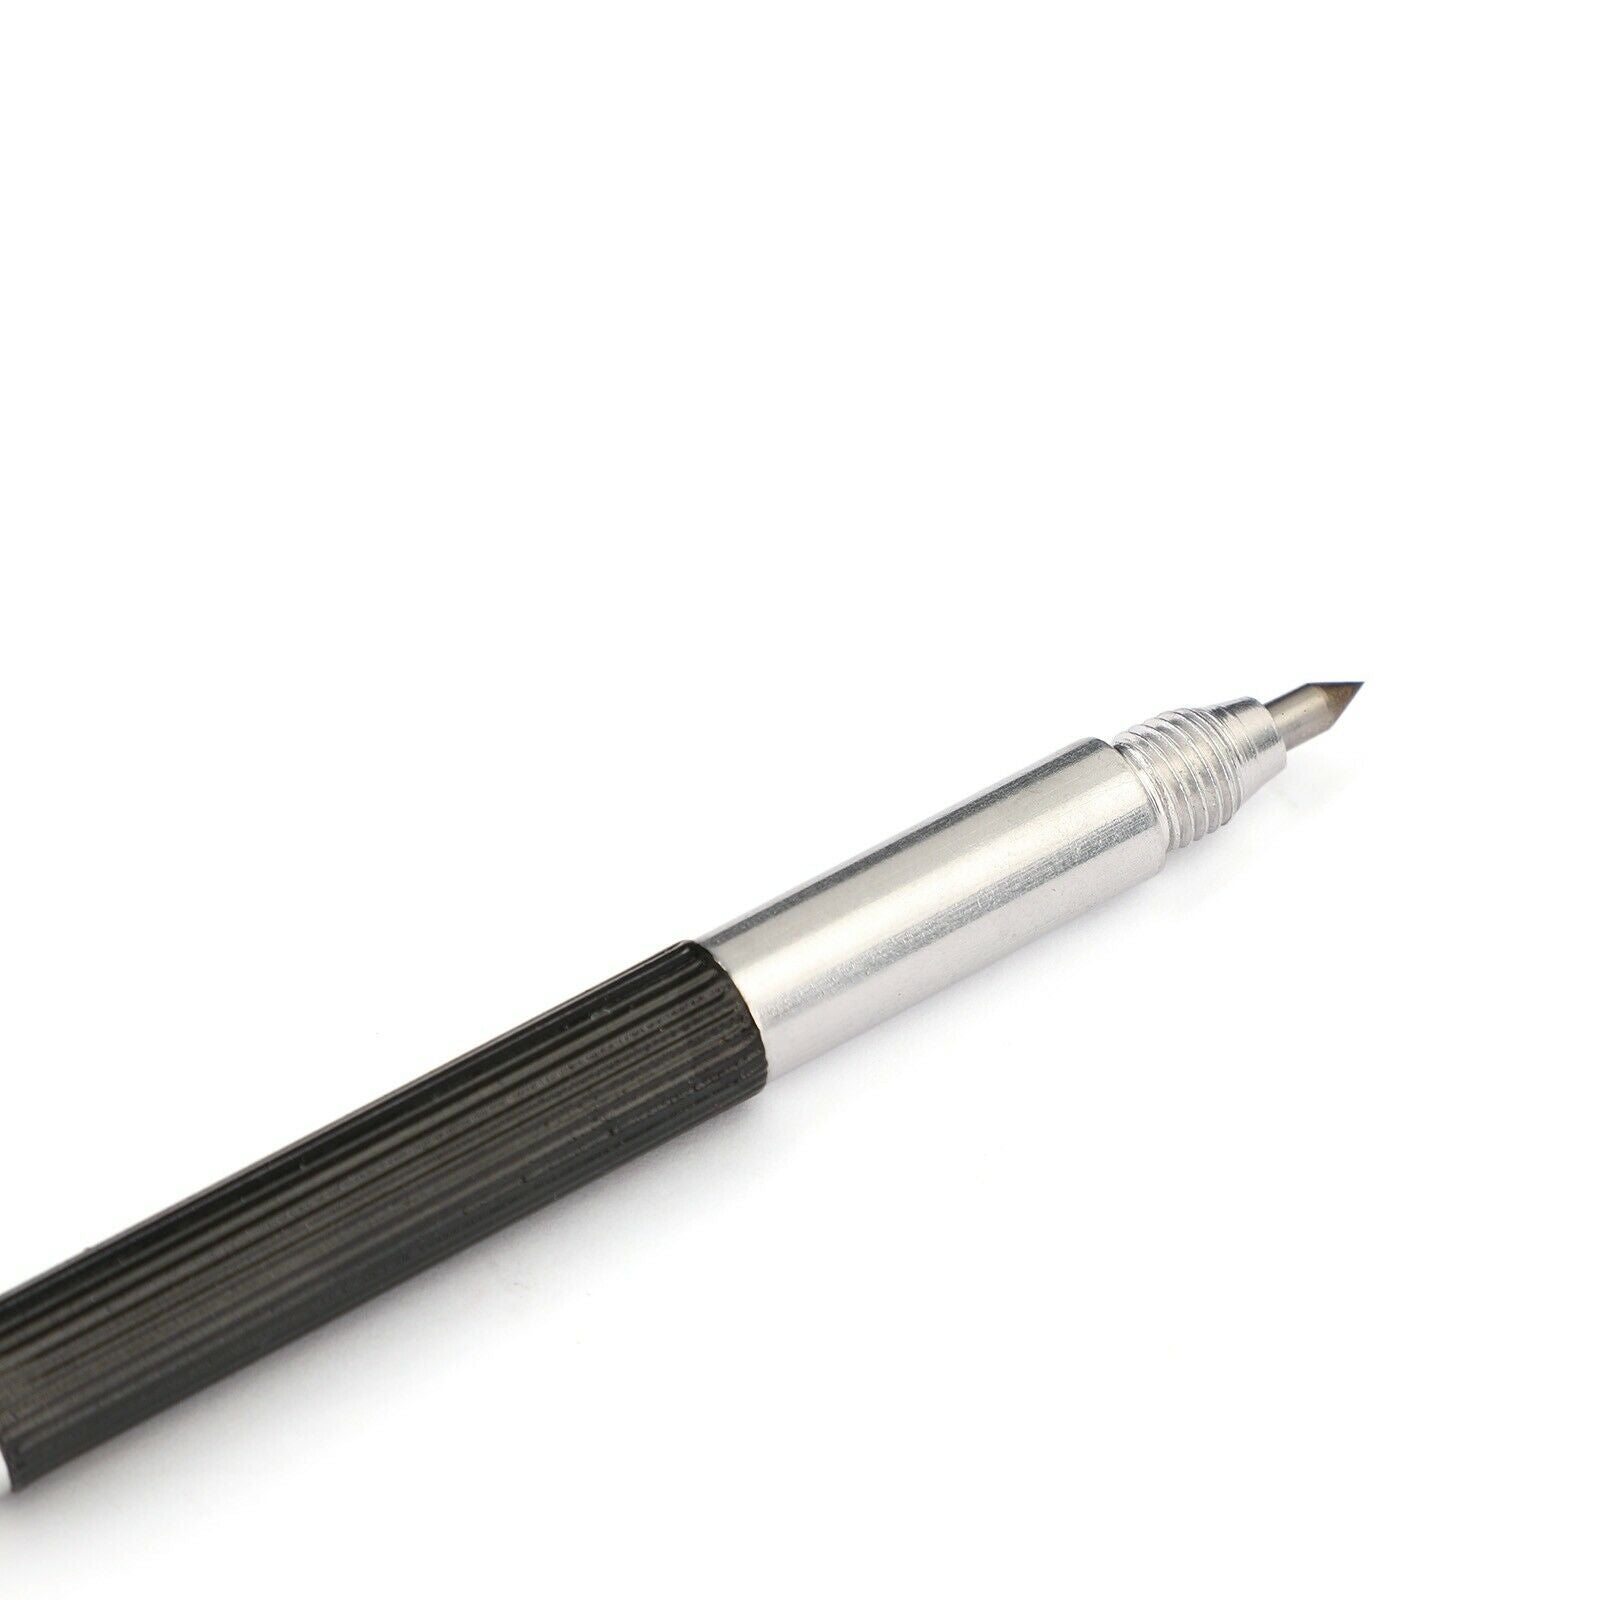 Double Ended Tungsten Carbide Scribing Pen Tip Steel Scriber Scribe Marker Metal